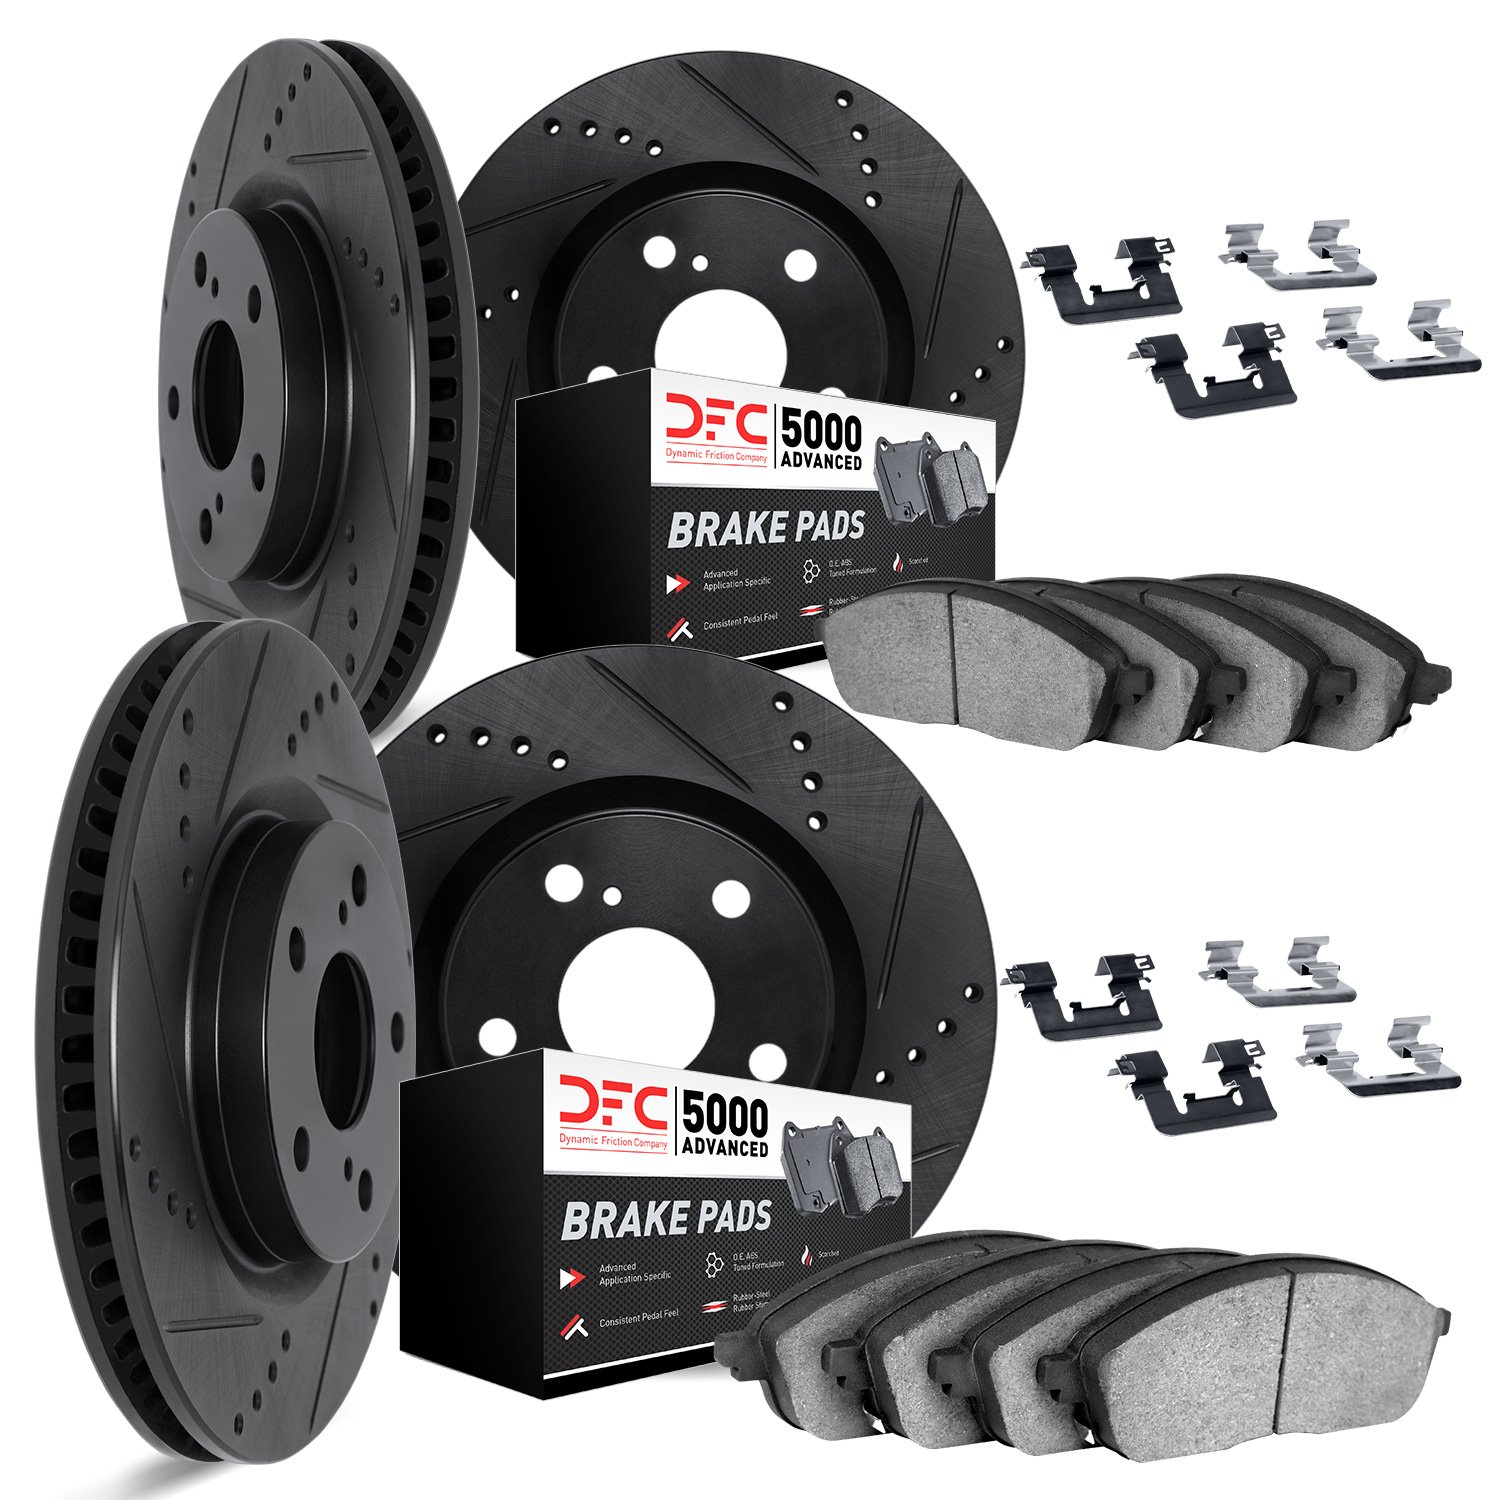 8514-40264 Drilled/Slotted Brake Rotors w/5000 Advanced Brake Pads Kit & Hardware [Black], 2003-2003 Mopar, Position: Front and